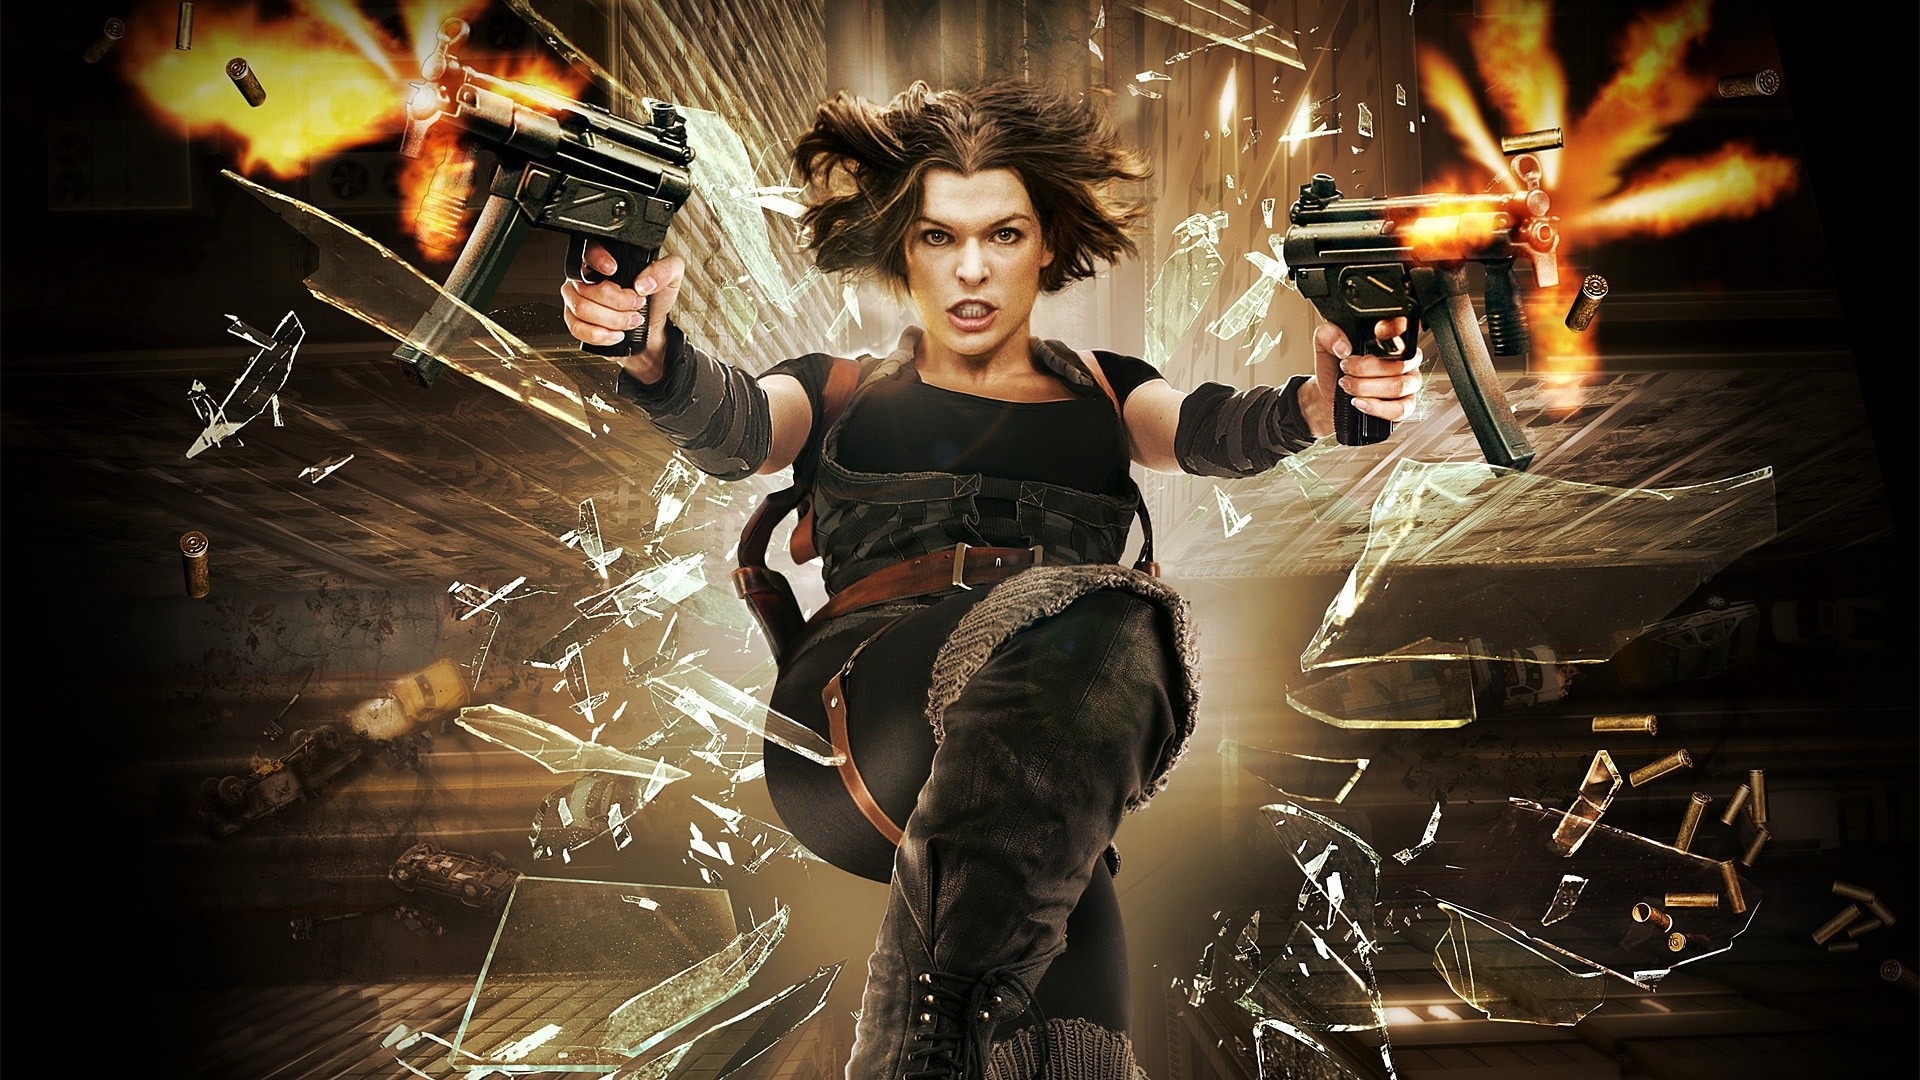 People 1920x1080 movies Resident Evil: Afterlife Milla Jovovich  gun bullet broken glass women girls with guns dual wield frontal view uzi